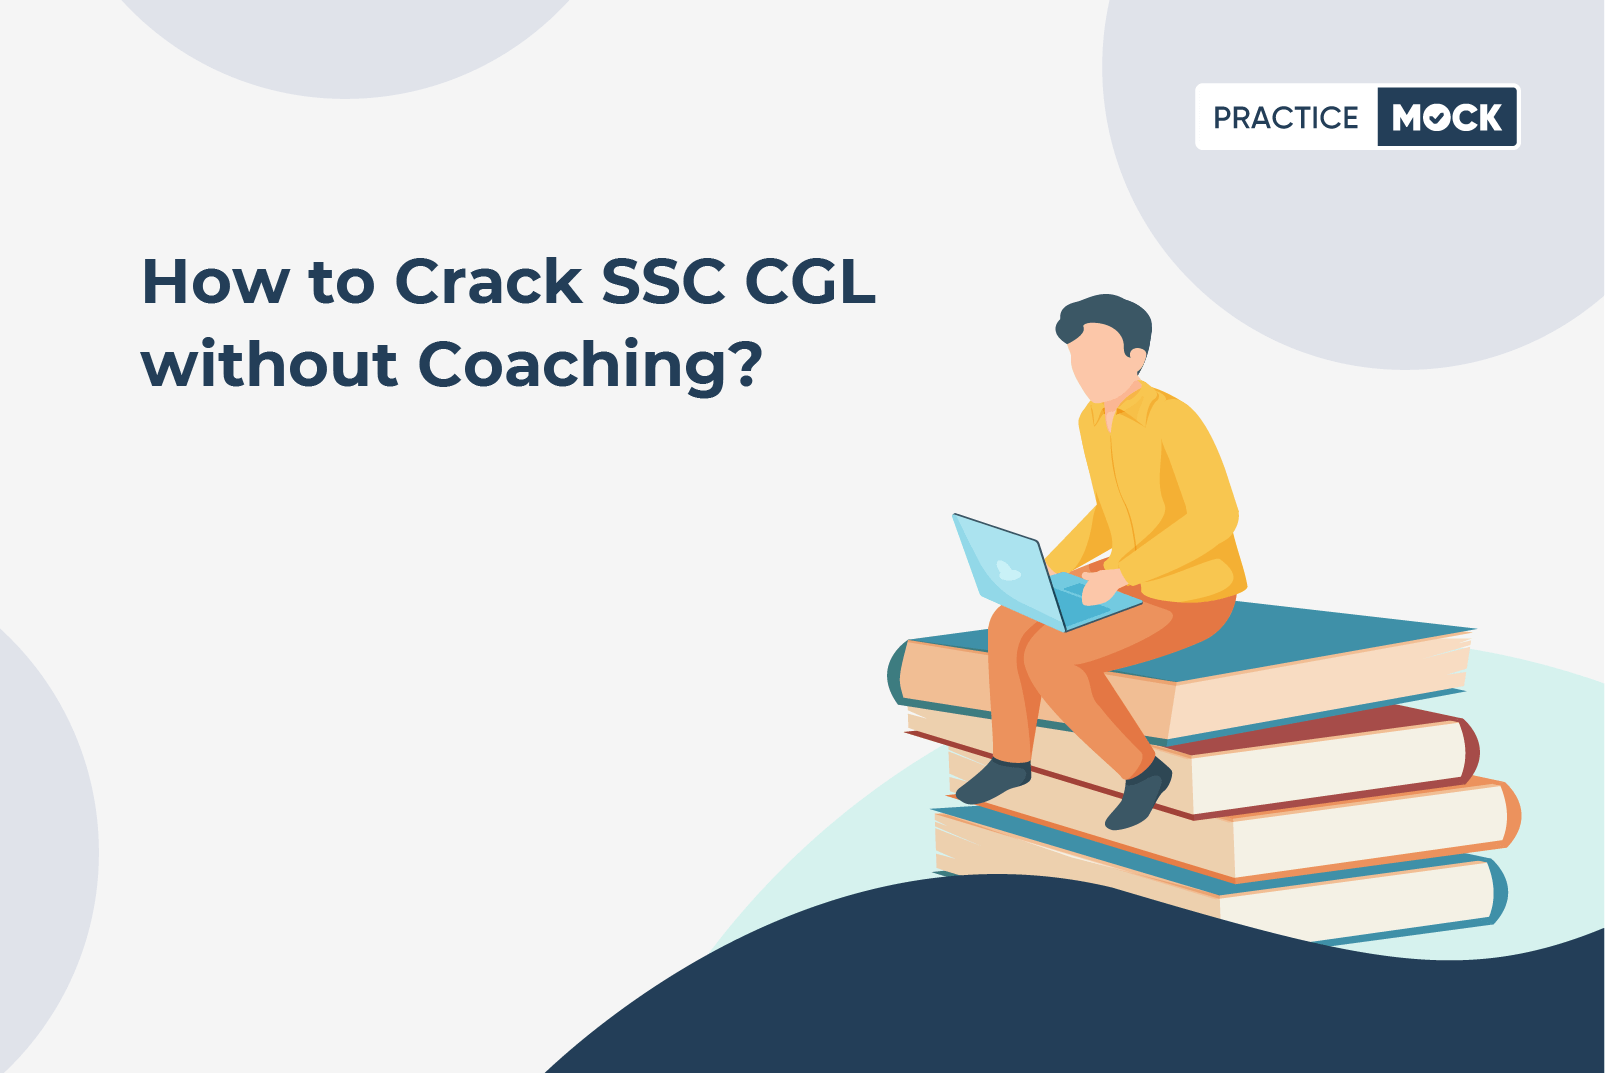 SSC CGL without coaching